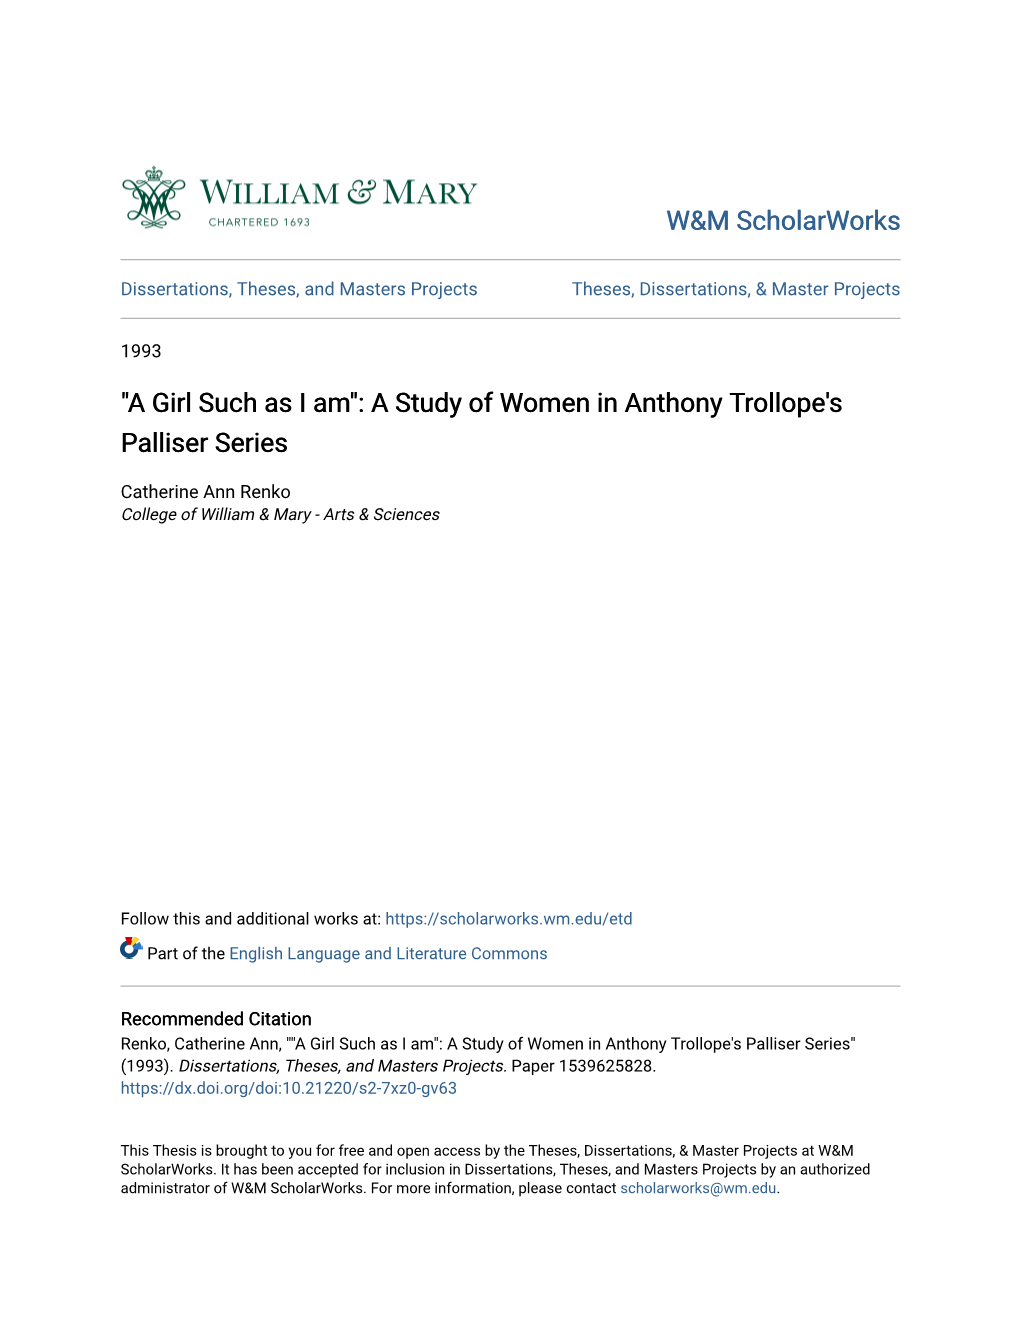 A Study of Women in Anthony Trollope's Palliser Series